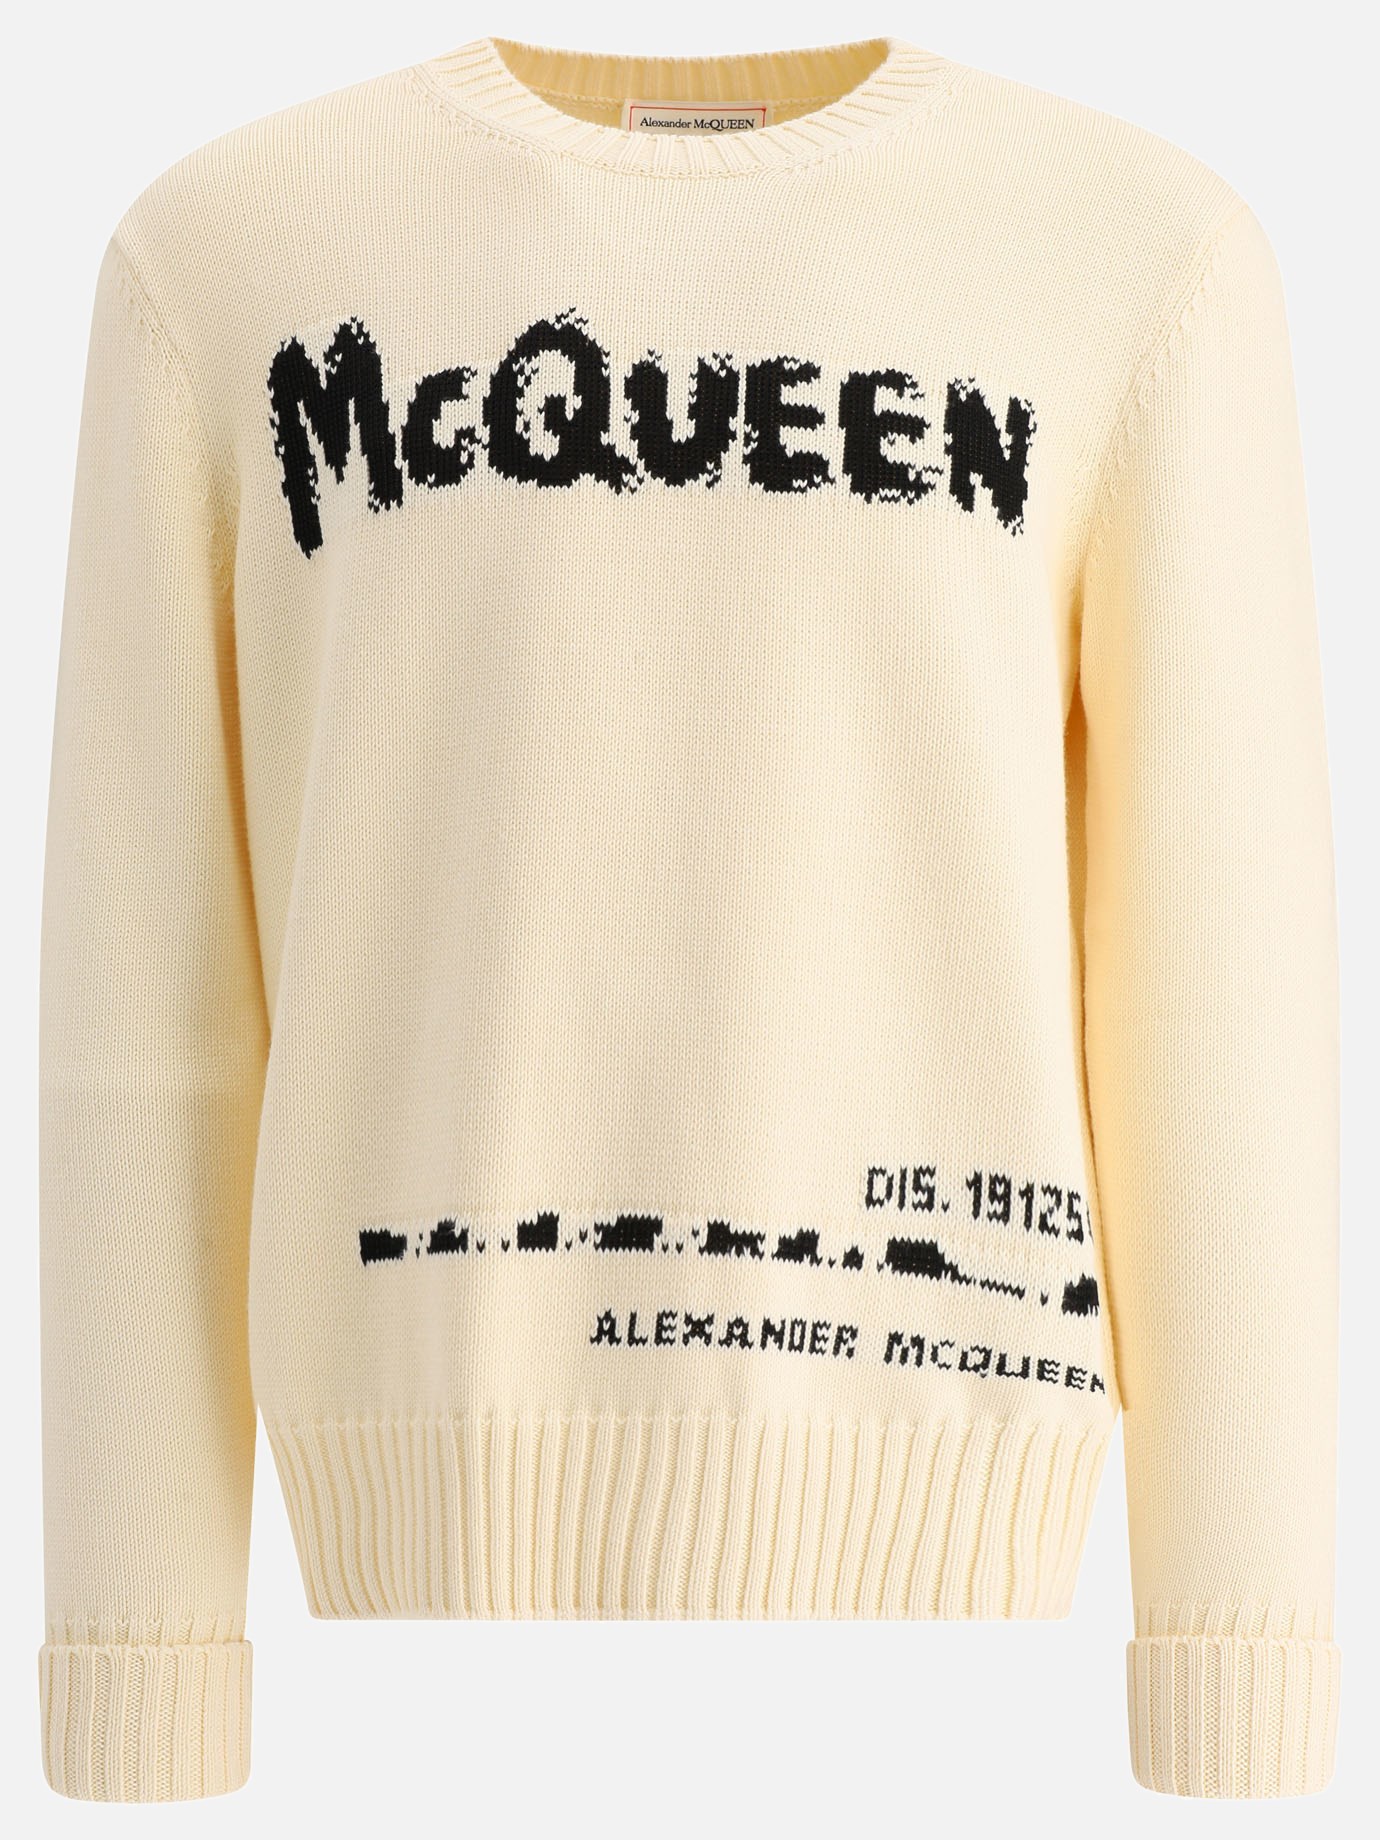  Graffiti  sweaterby Alexander McQueen - 0